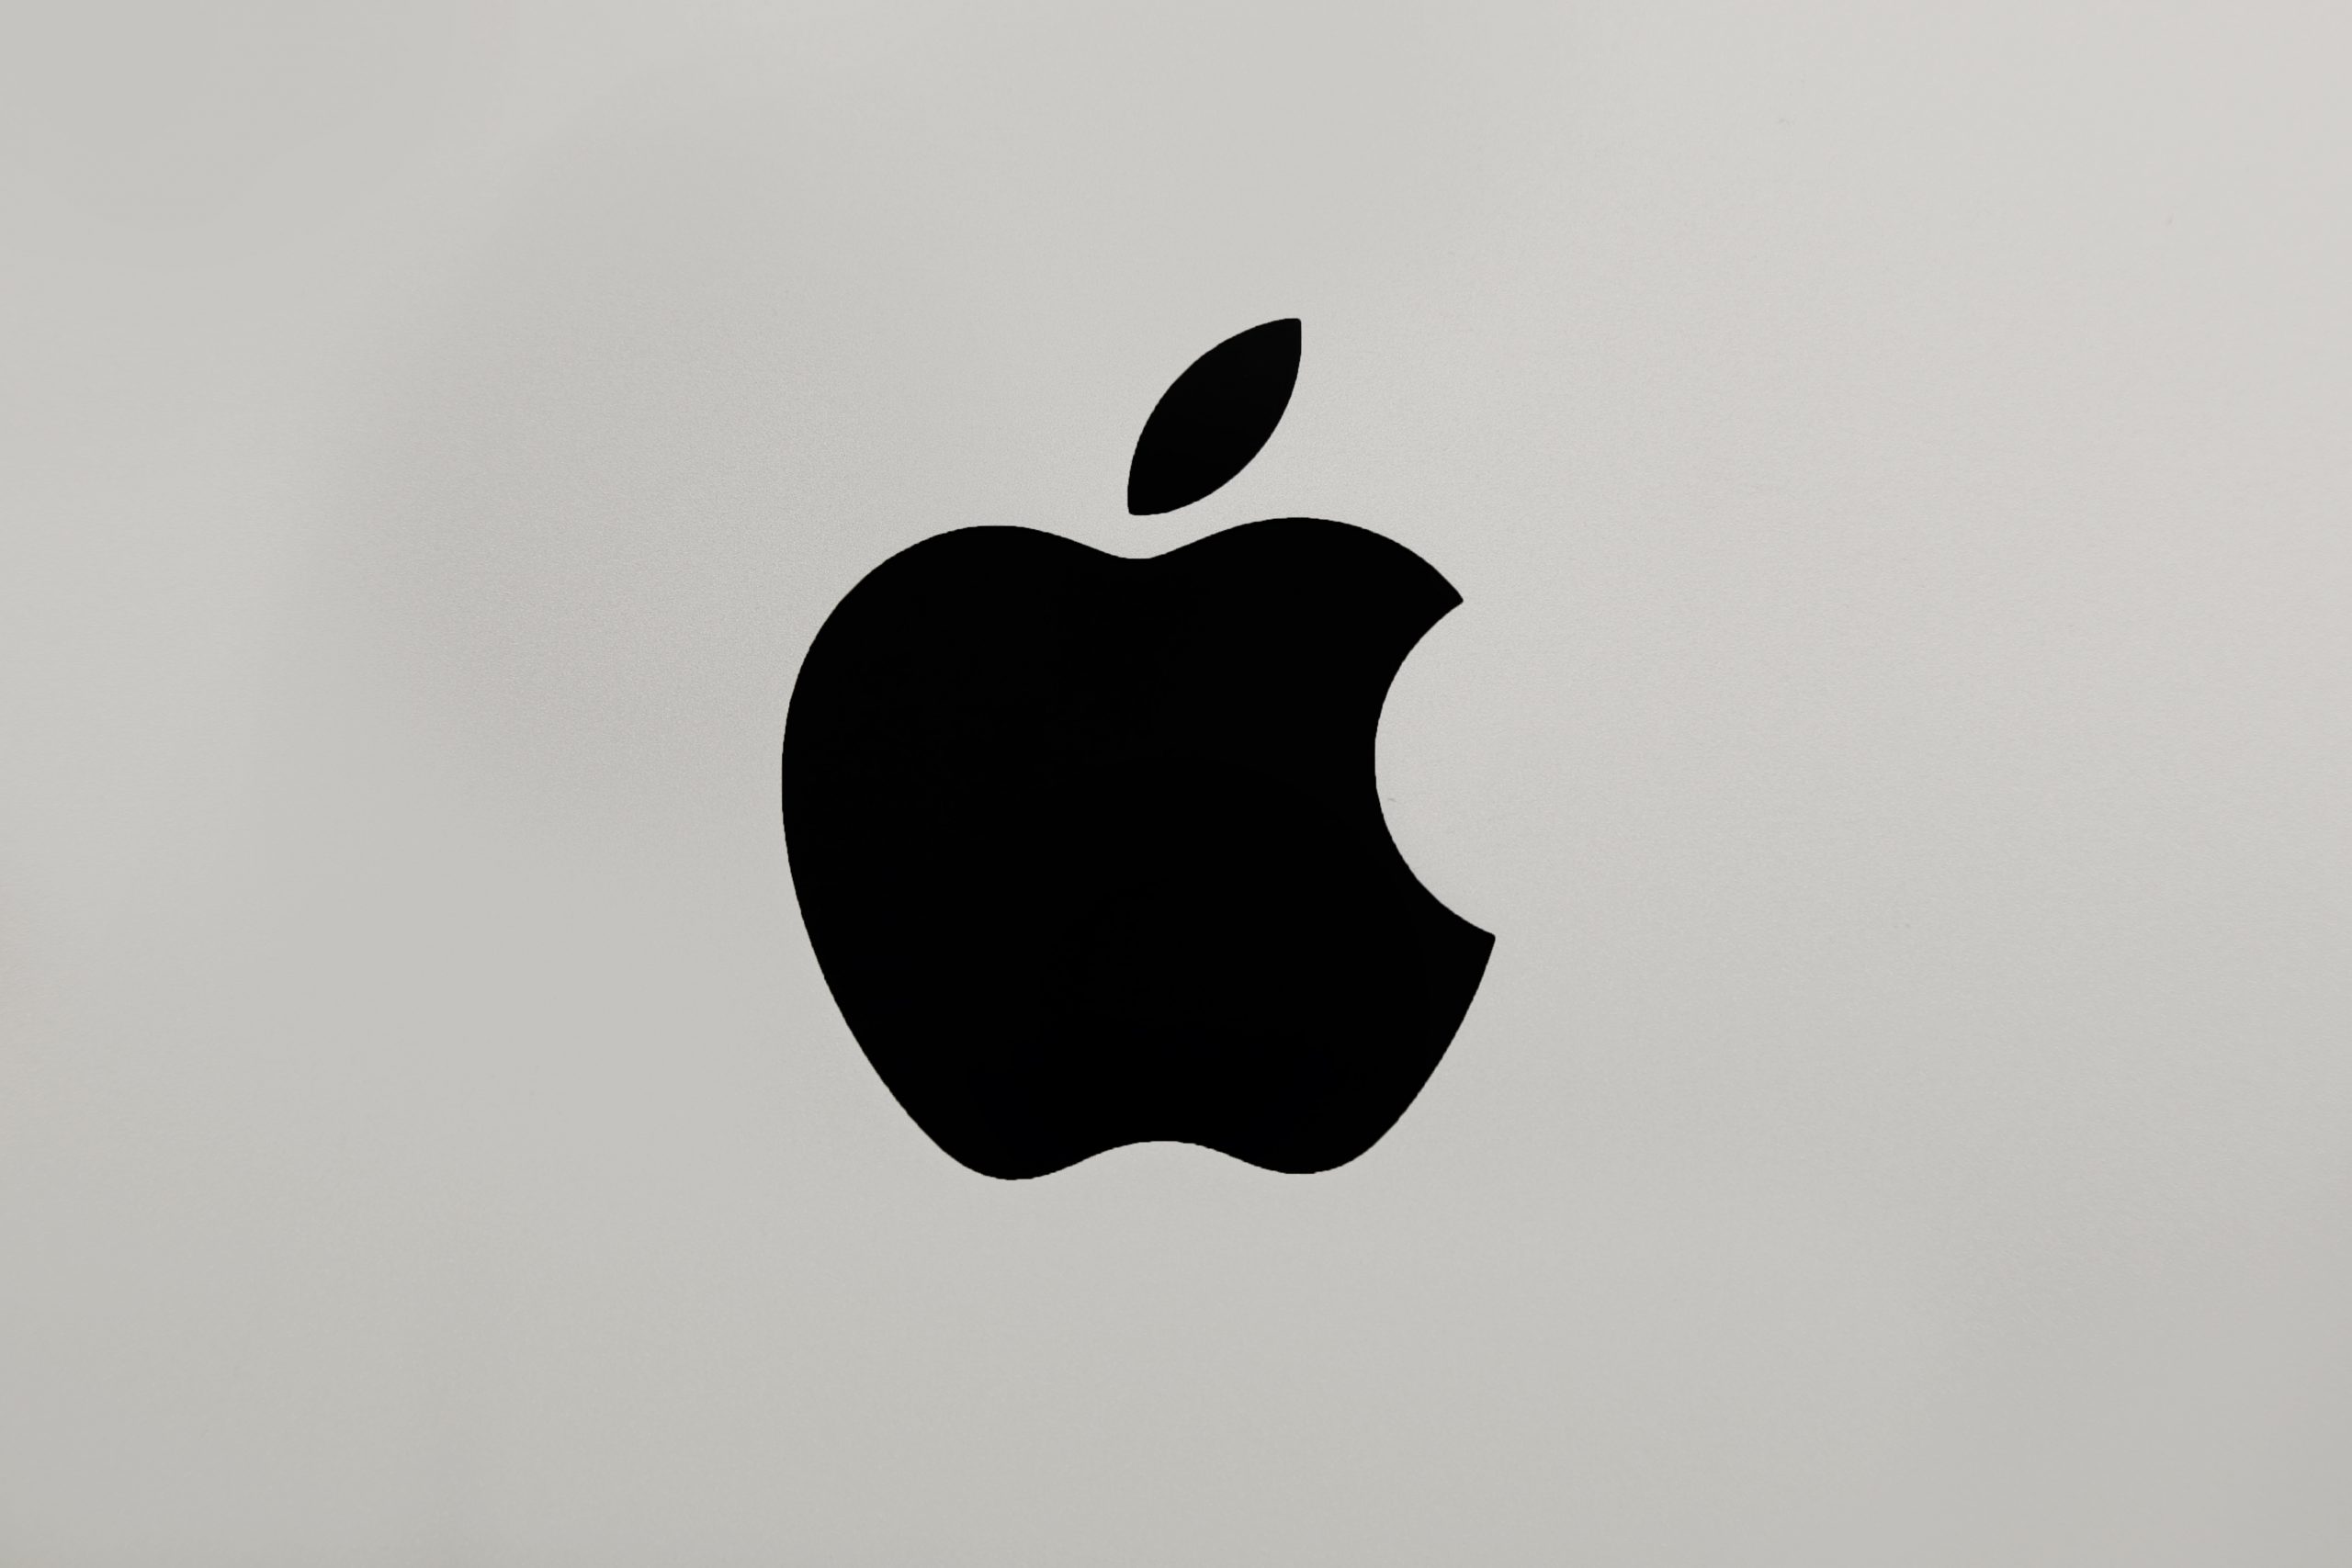 Apple logo on gray background